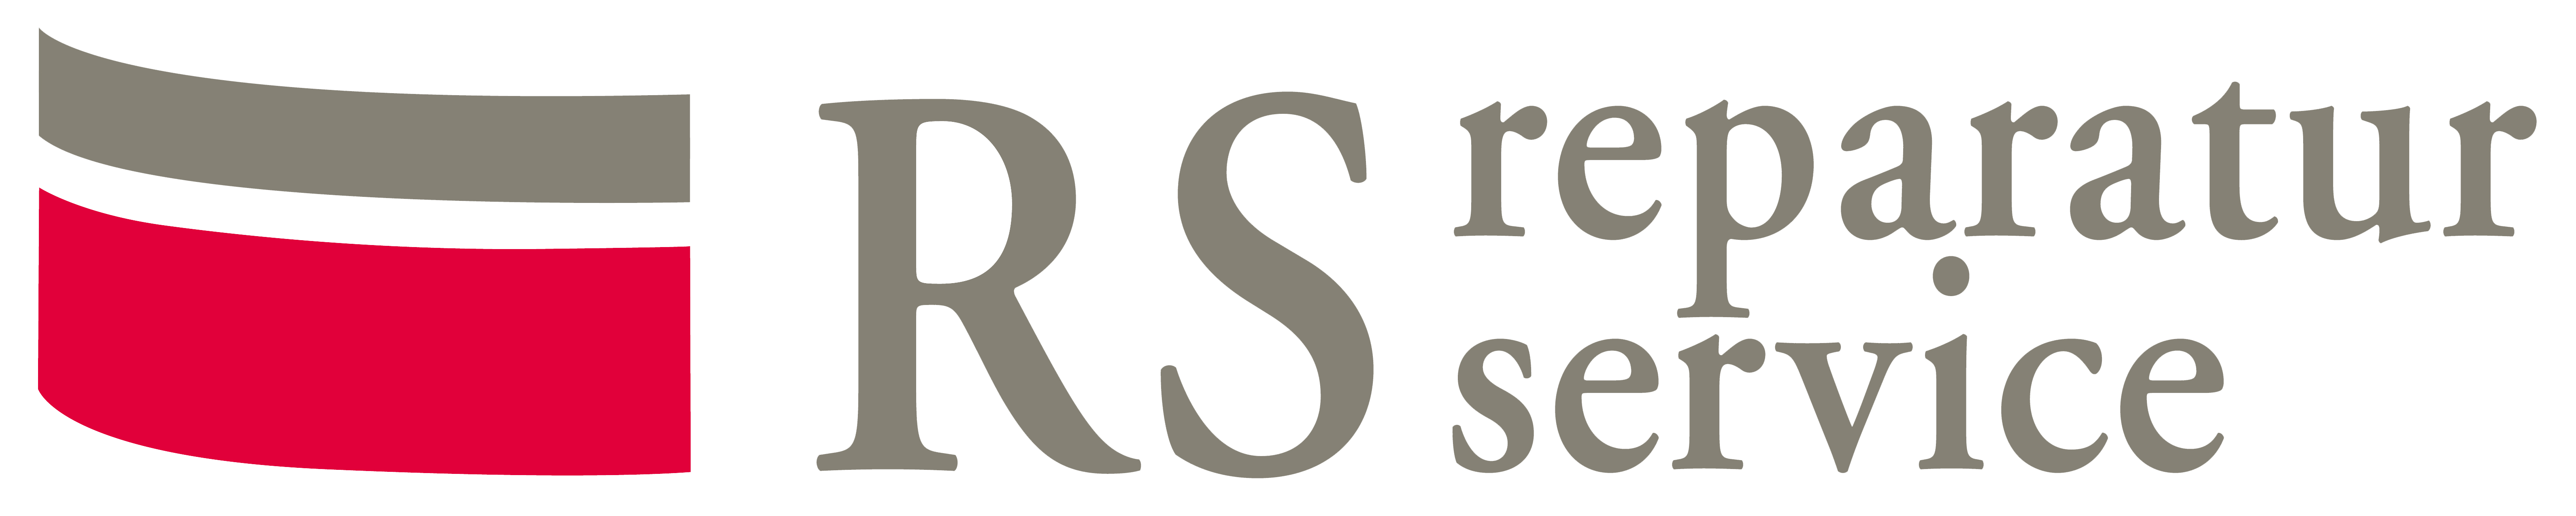 RS-reparaturservice